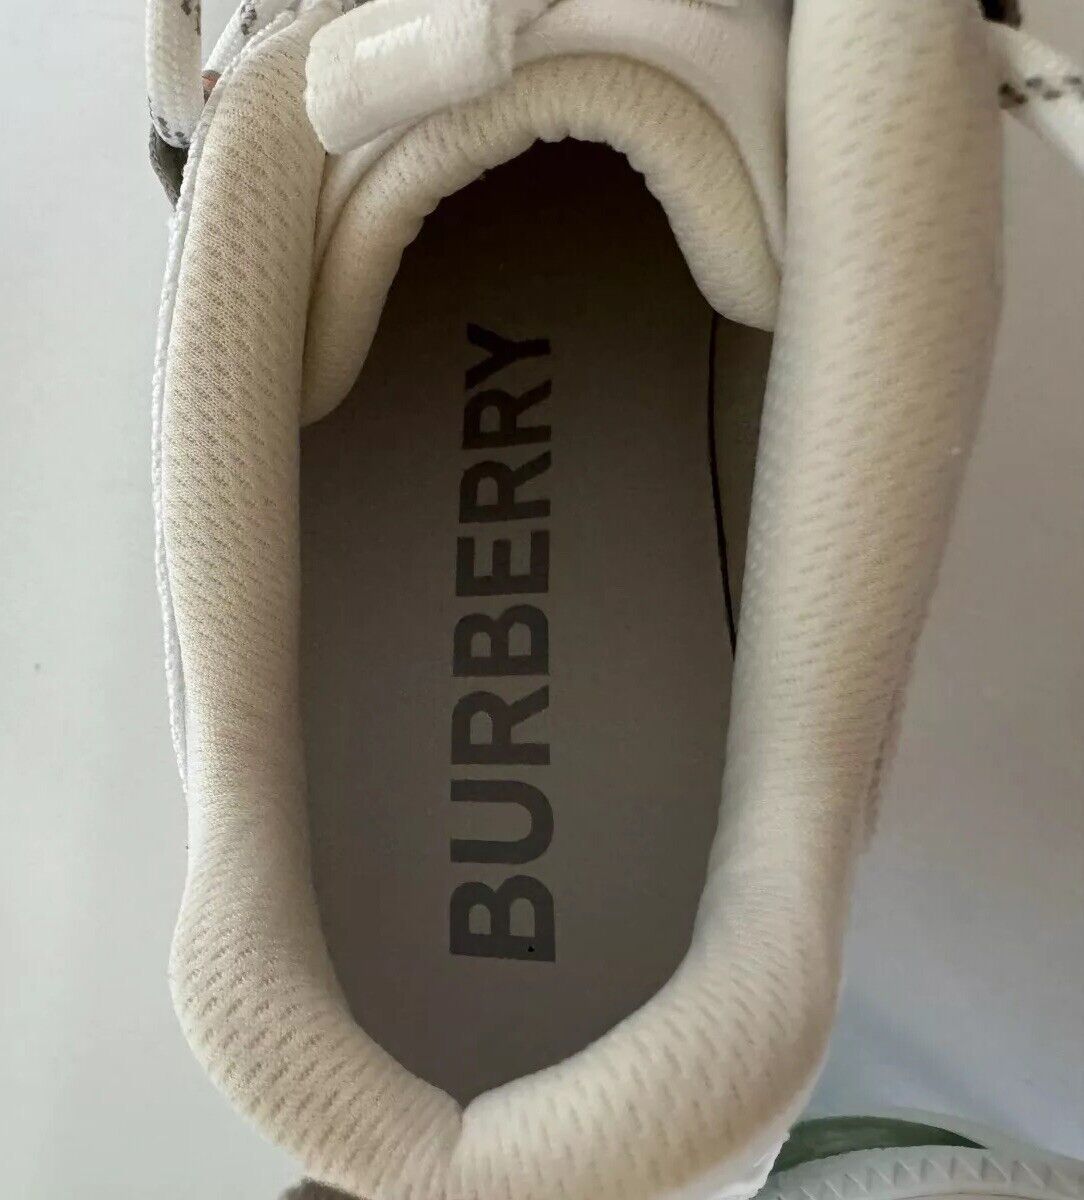 NIB Burberry Women's White Fashion Low Top Sneakers 9 US (39 Eu) 8053929